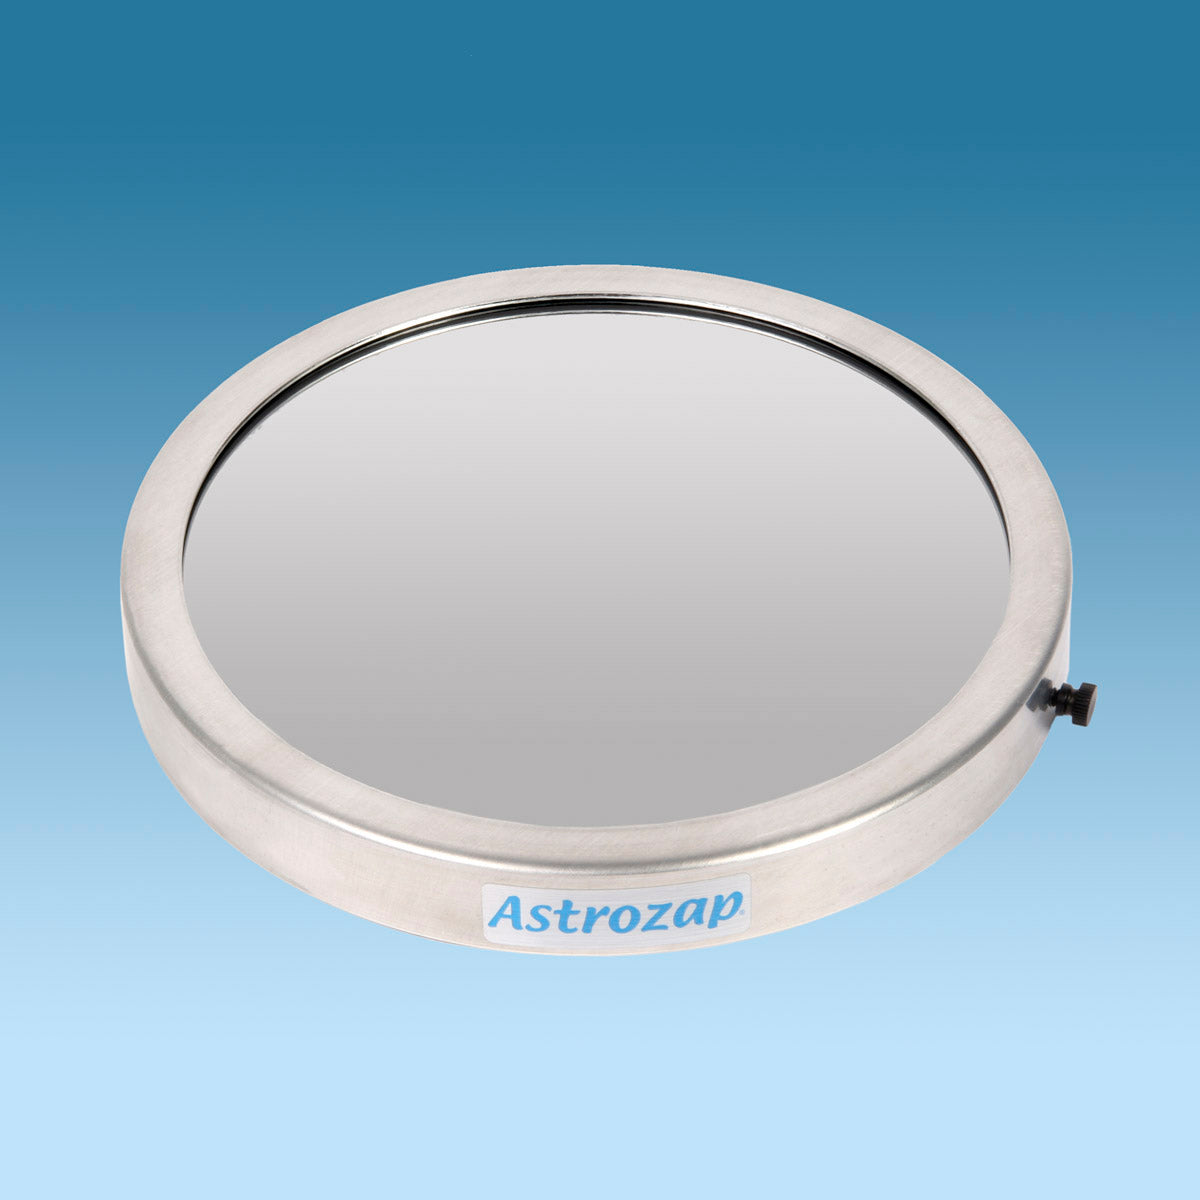 Astrozap Solar Filters